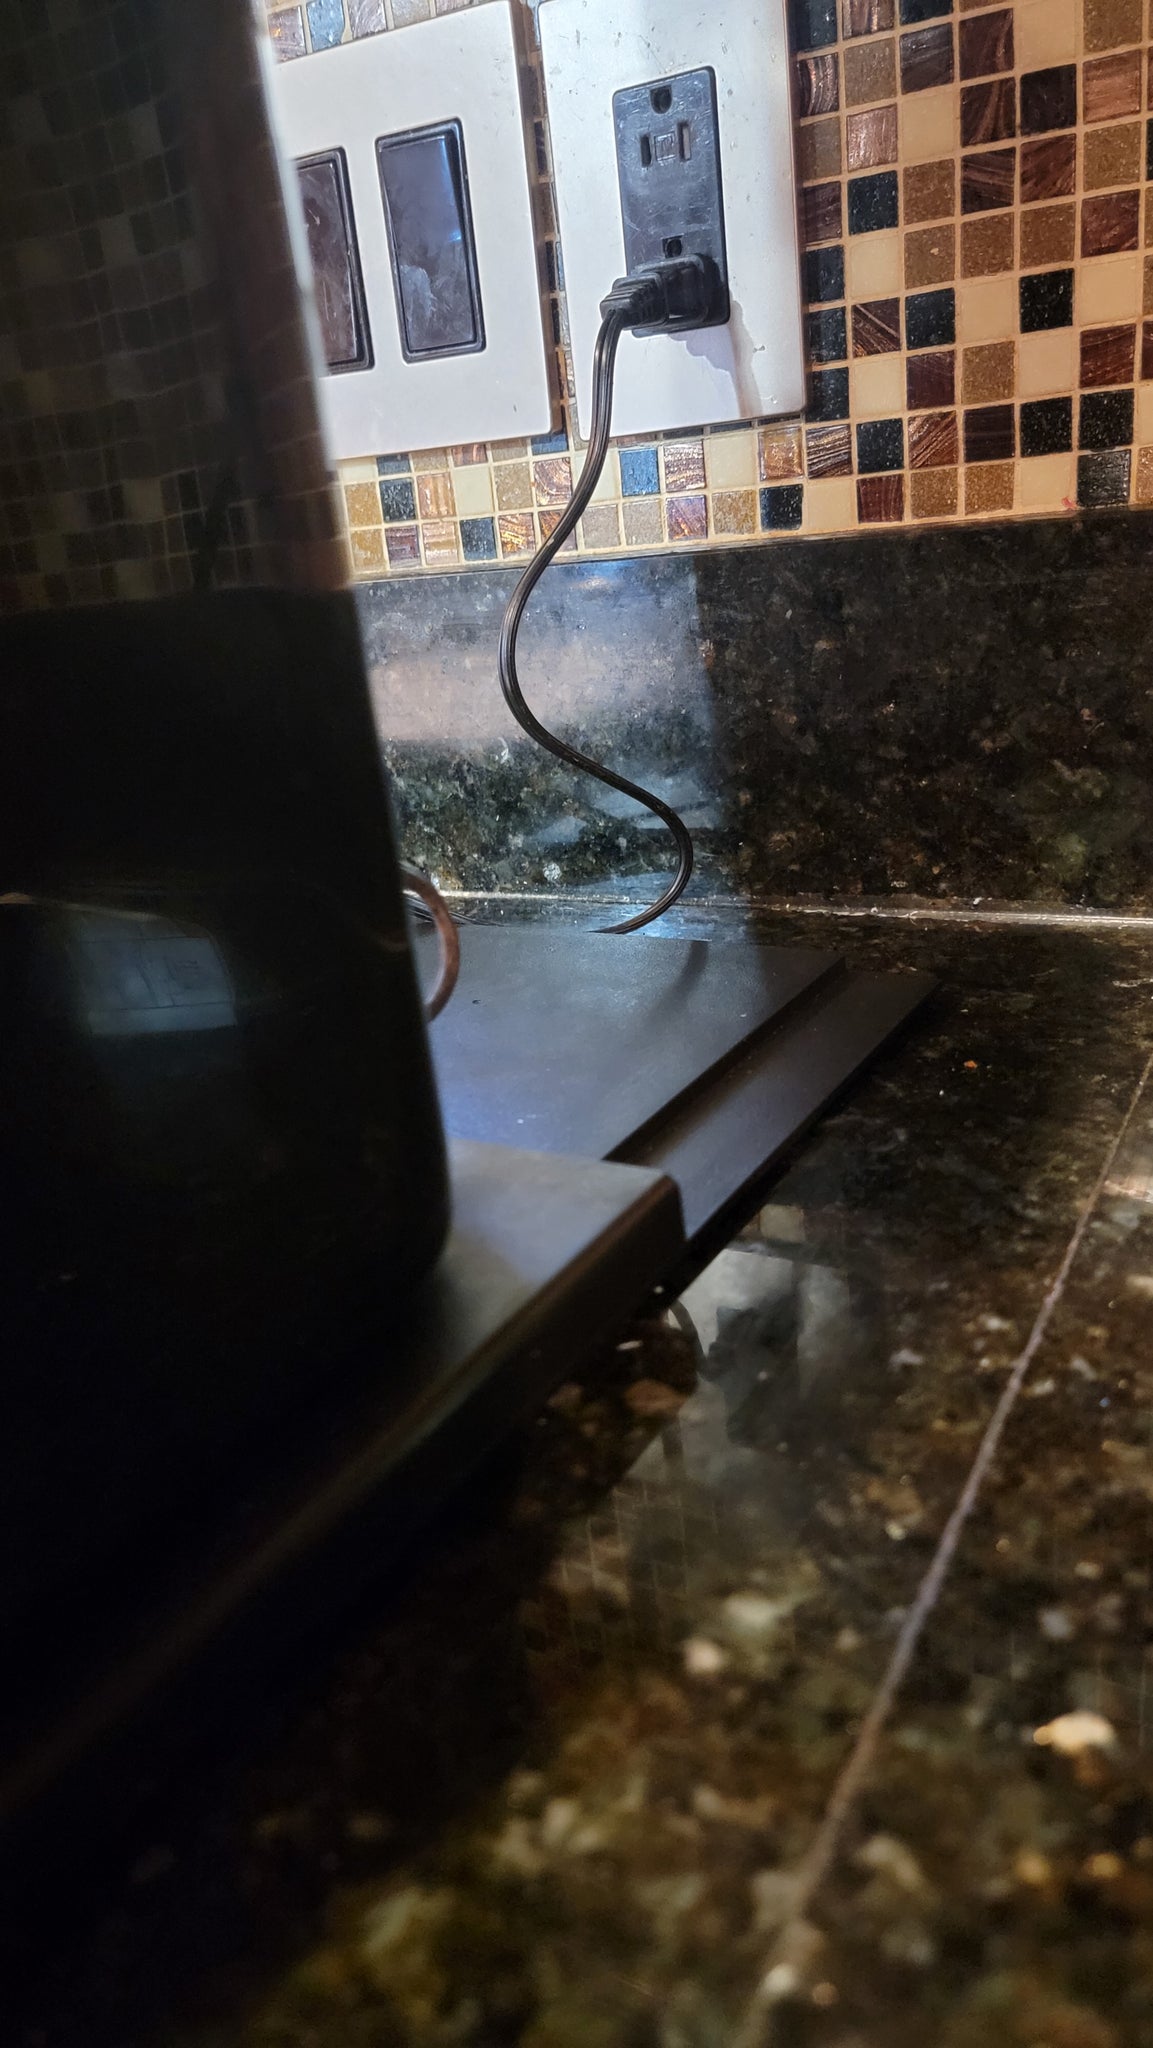 kitchen appliance sliding caddy sliding coffee